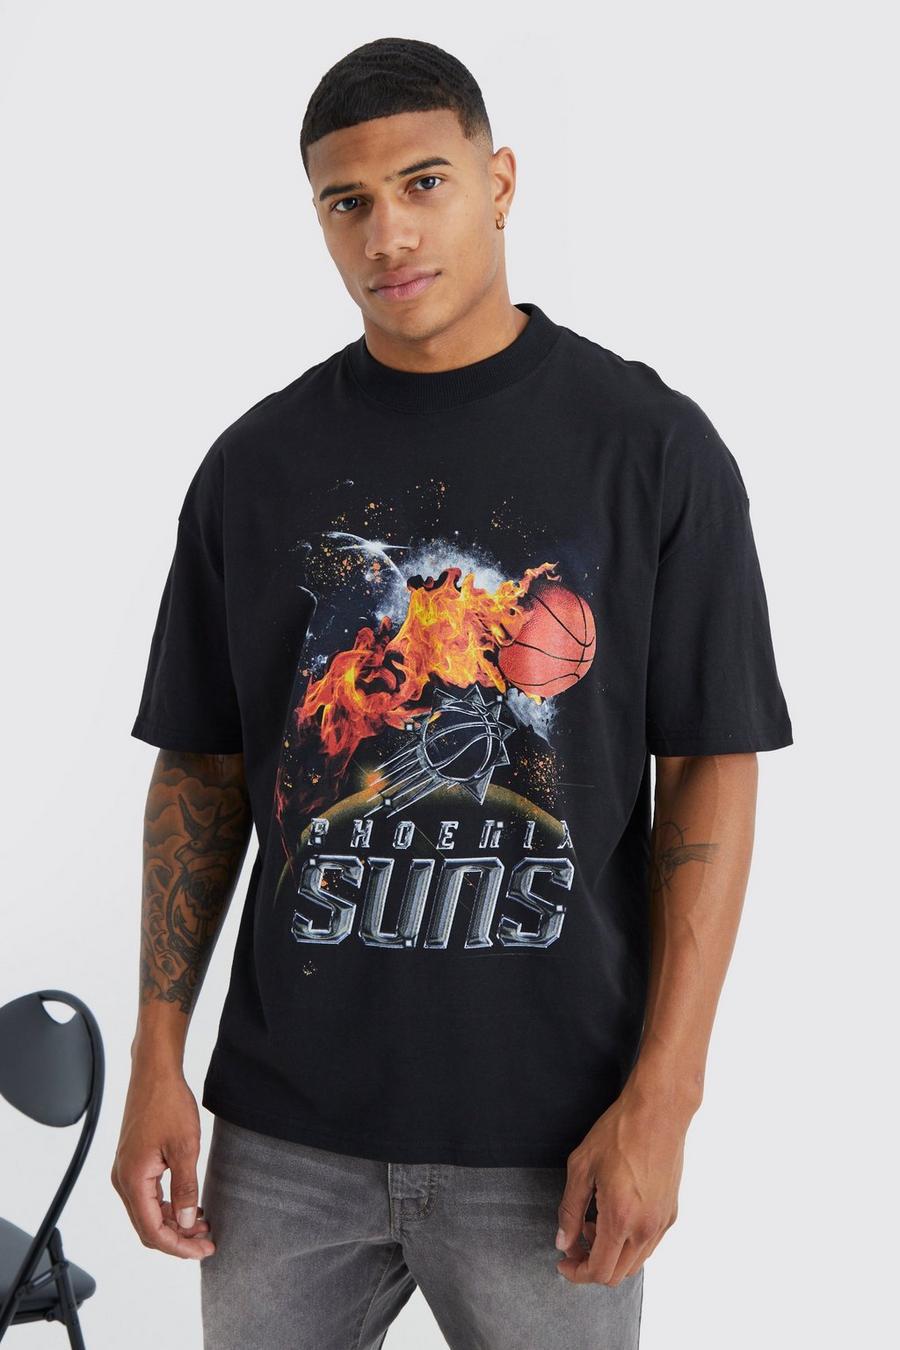 NBA Phoenix Suns Jogger Pants High Quality Apparel Slim fit Cotton